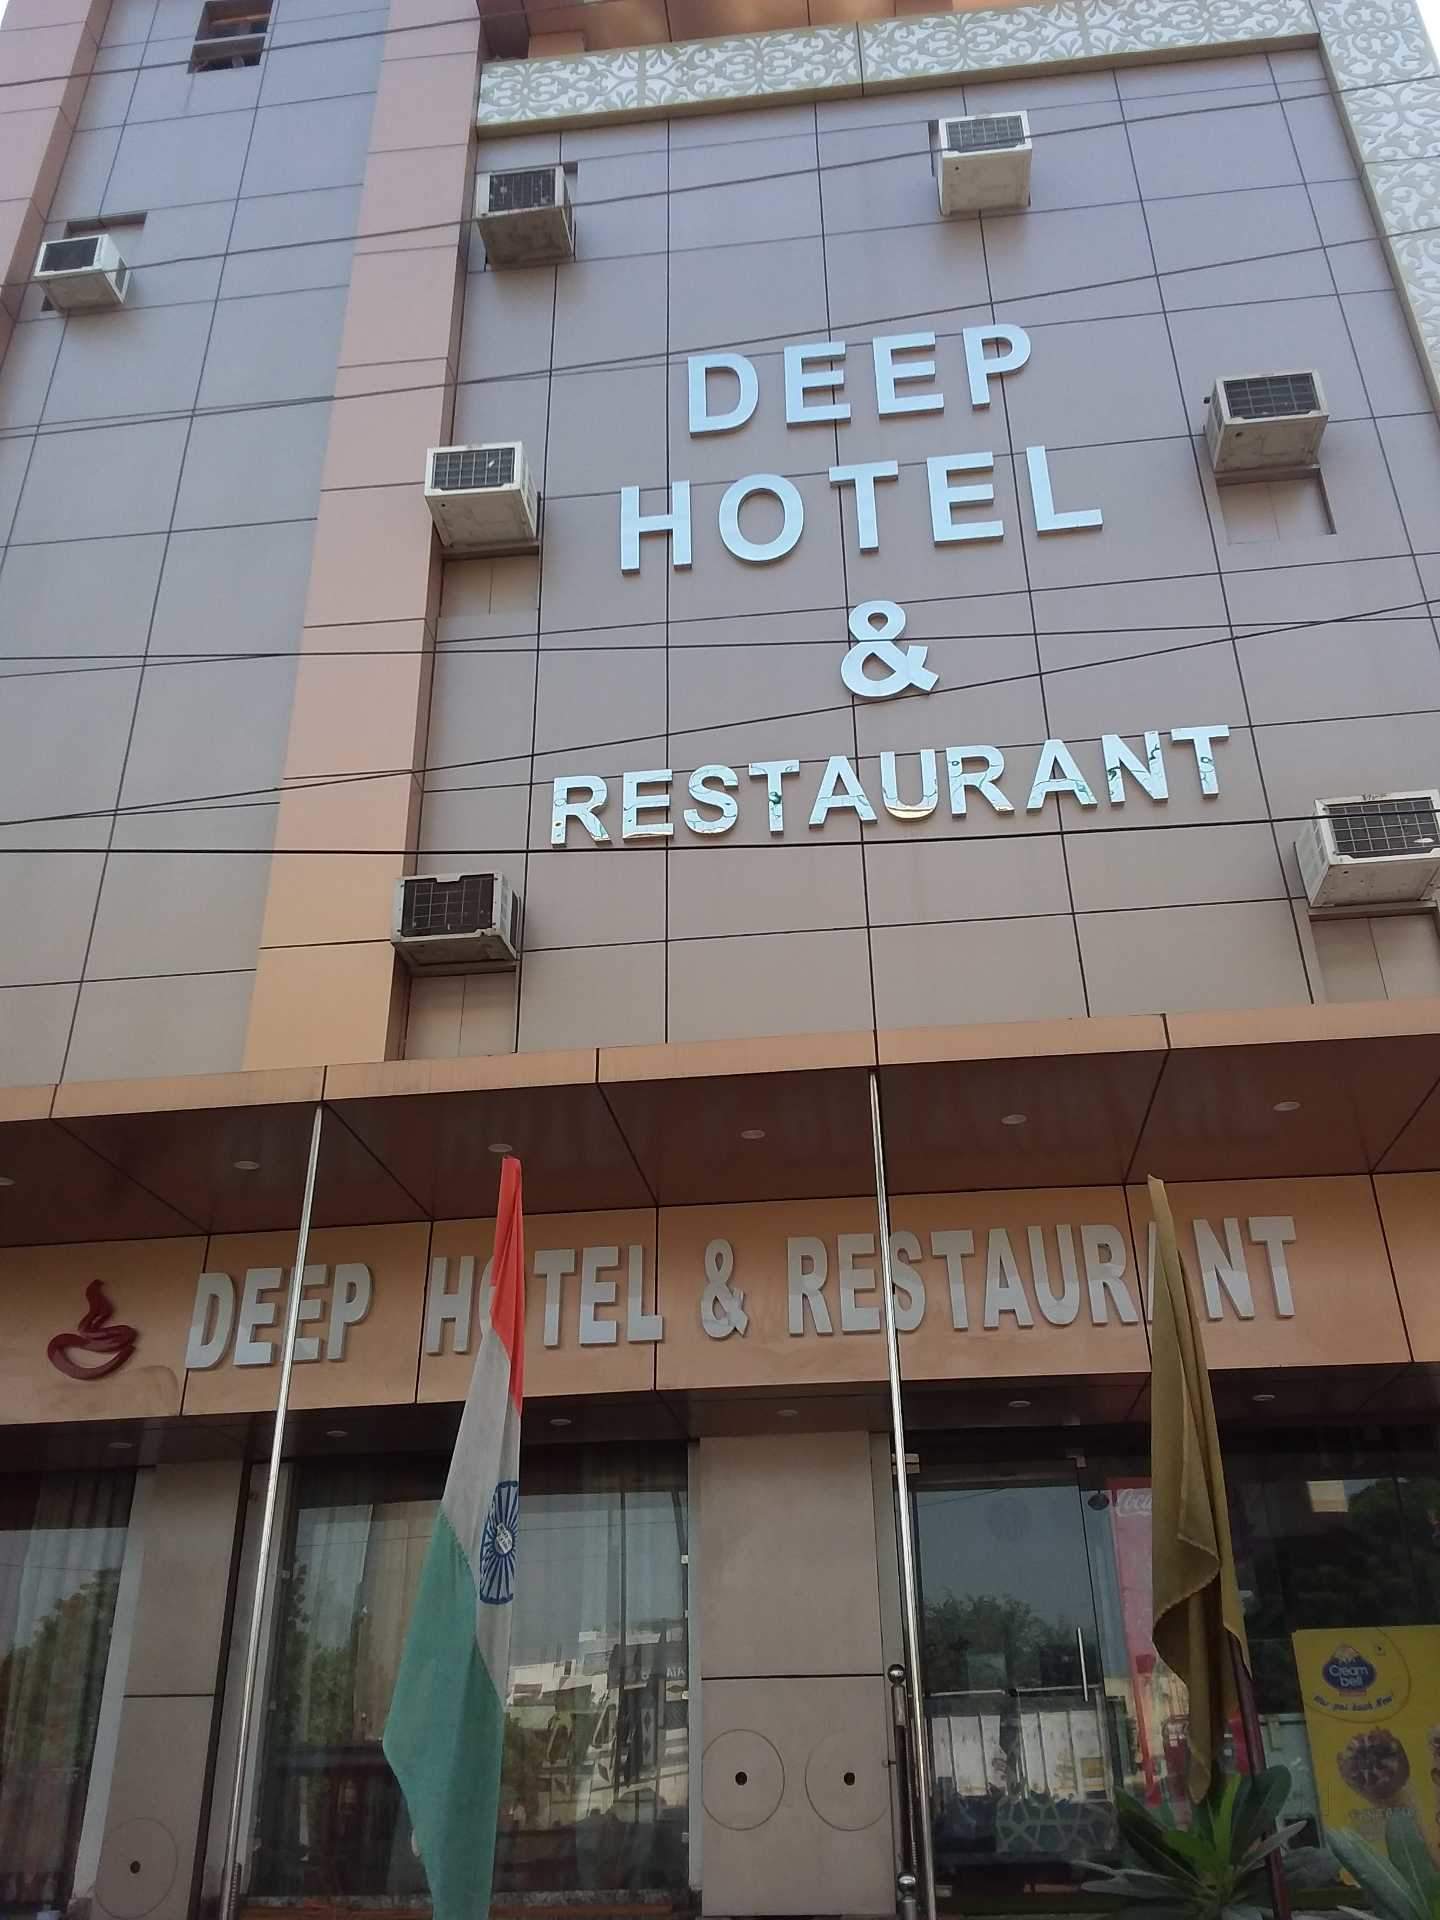 Deep Hotel & Restaurant|Hotel|Accomodation